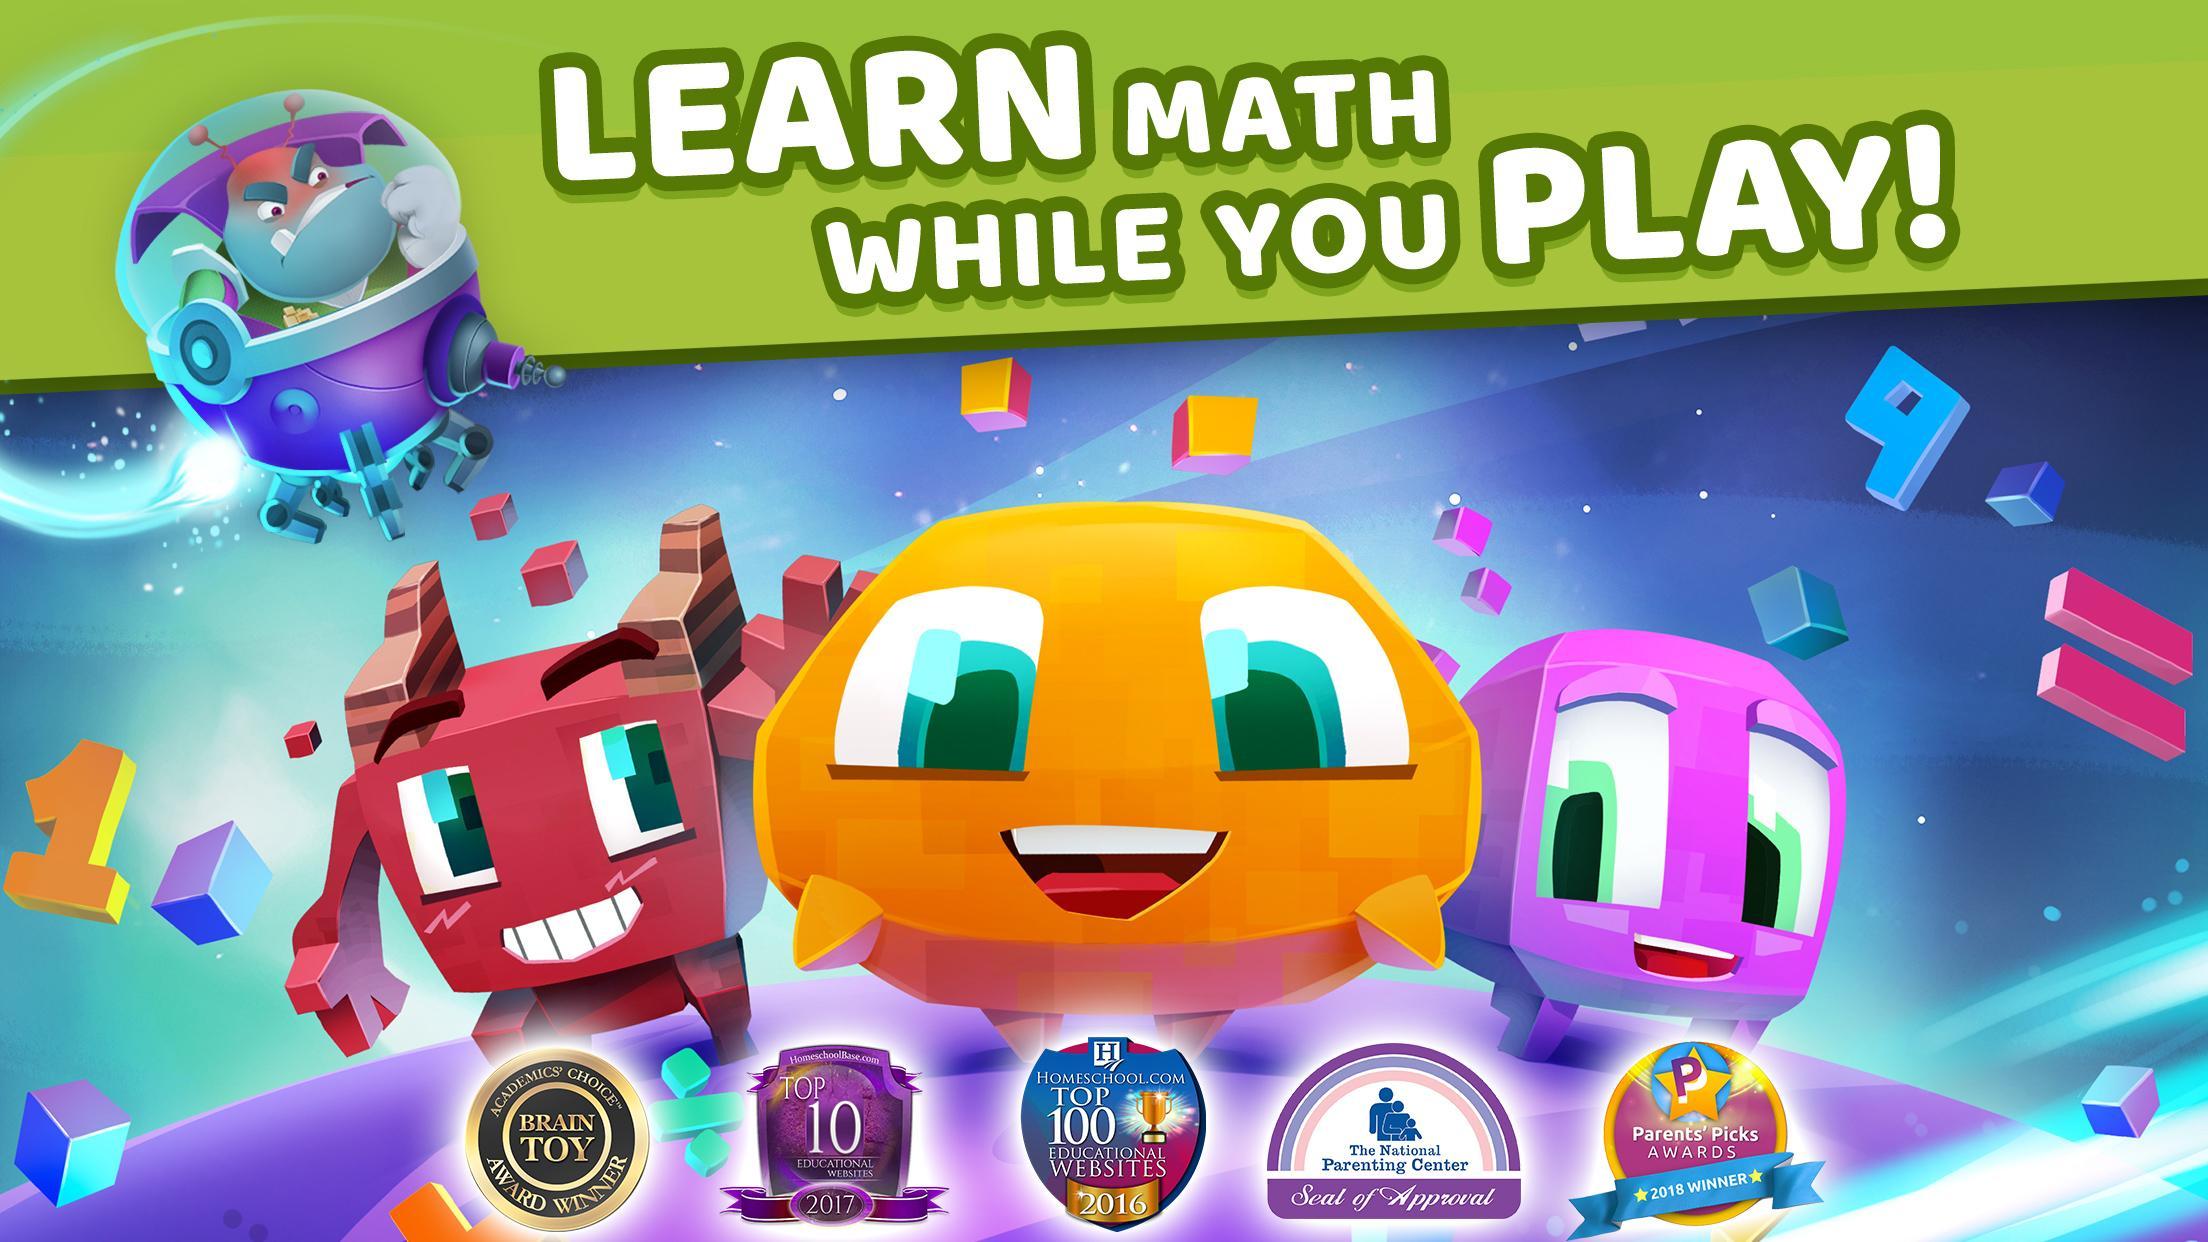 Matific Galaxy - Maths Games for 4th Graders 2.2.2 Screenshot 13